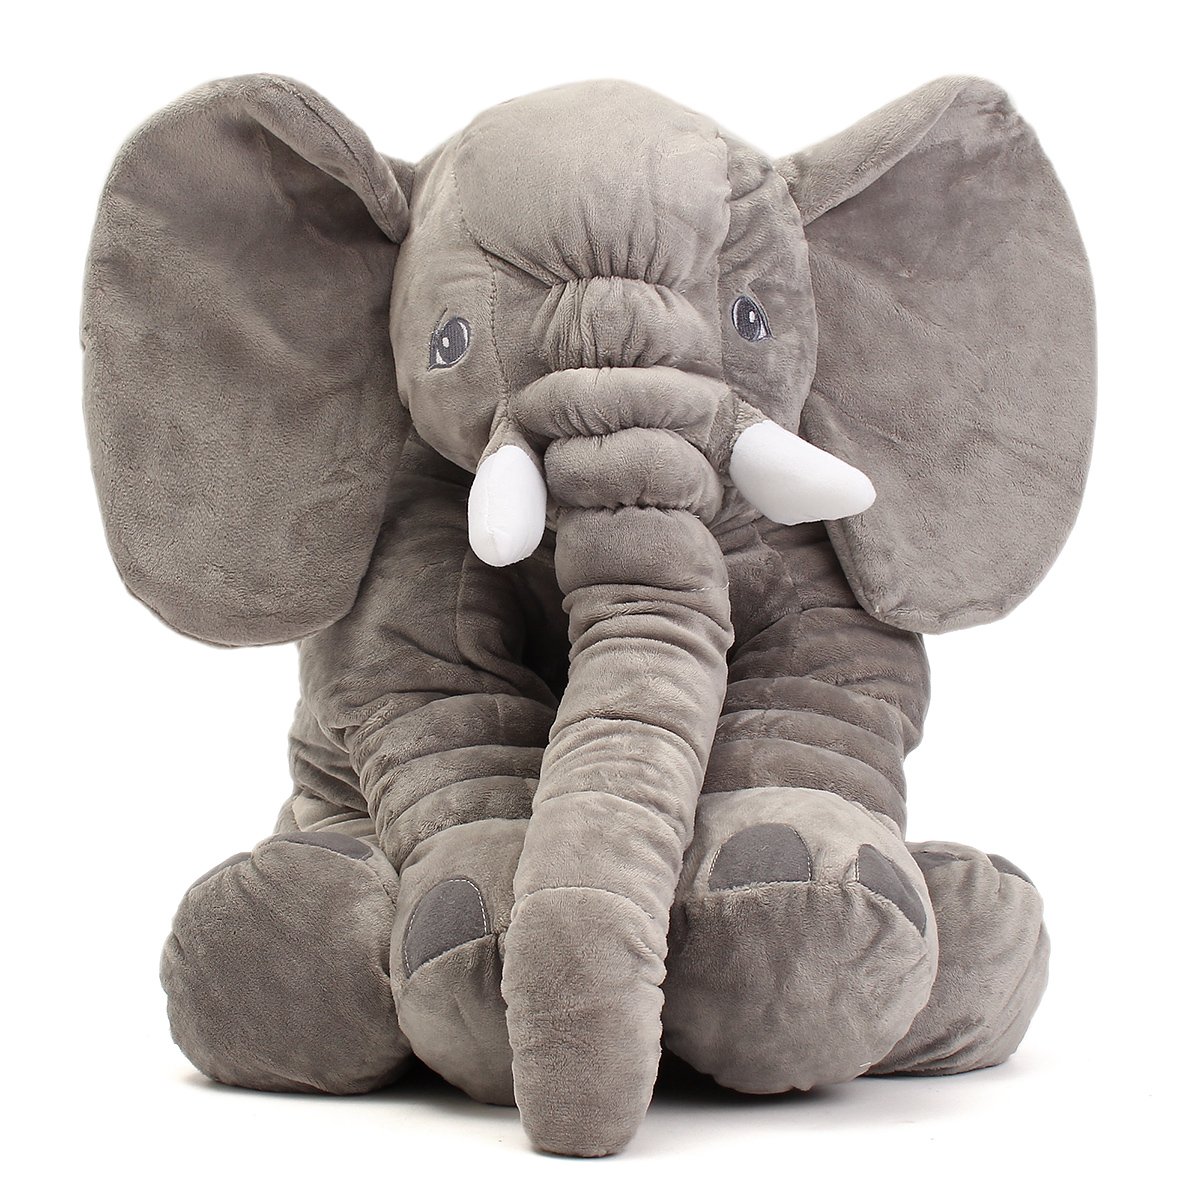 235quot-60cm-Cute-Jumbo-Elephant-Plush-Doll-Stuffed-Animal-Soft-Kids-Toy-Gift-1107307-7